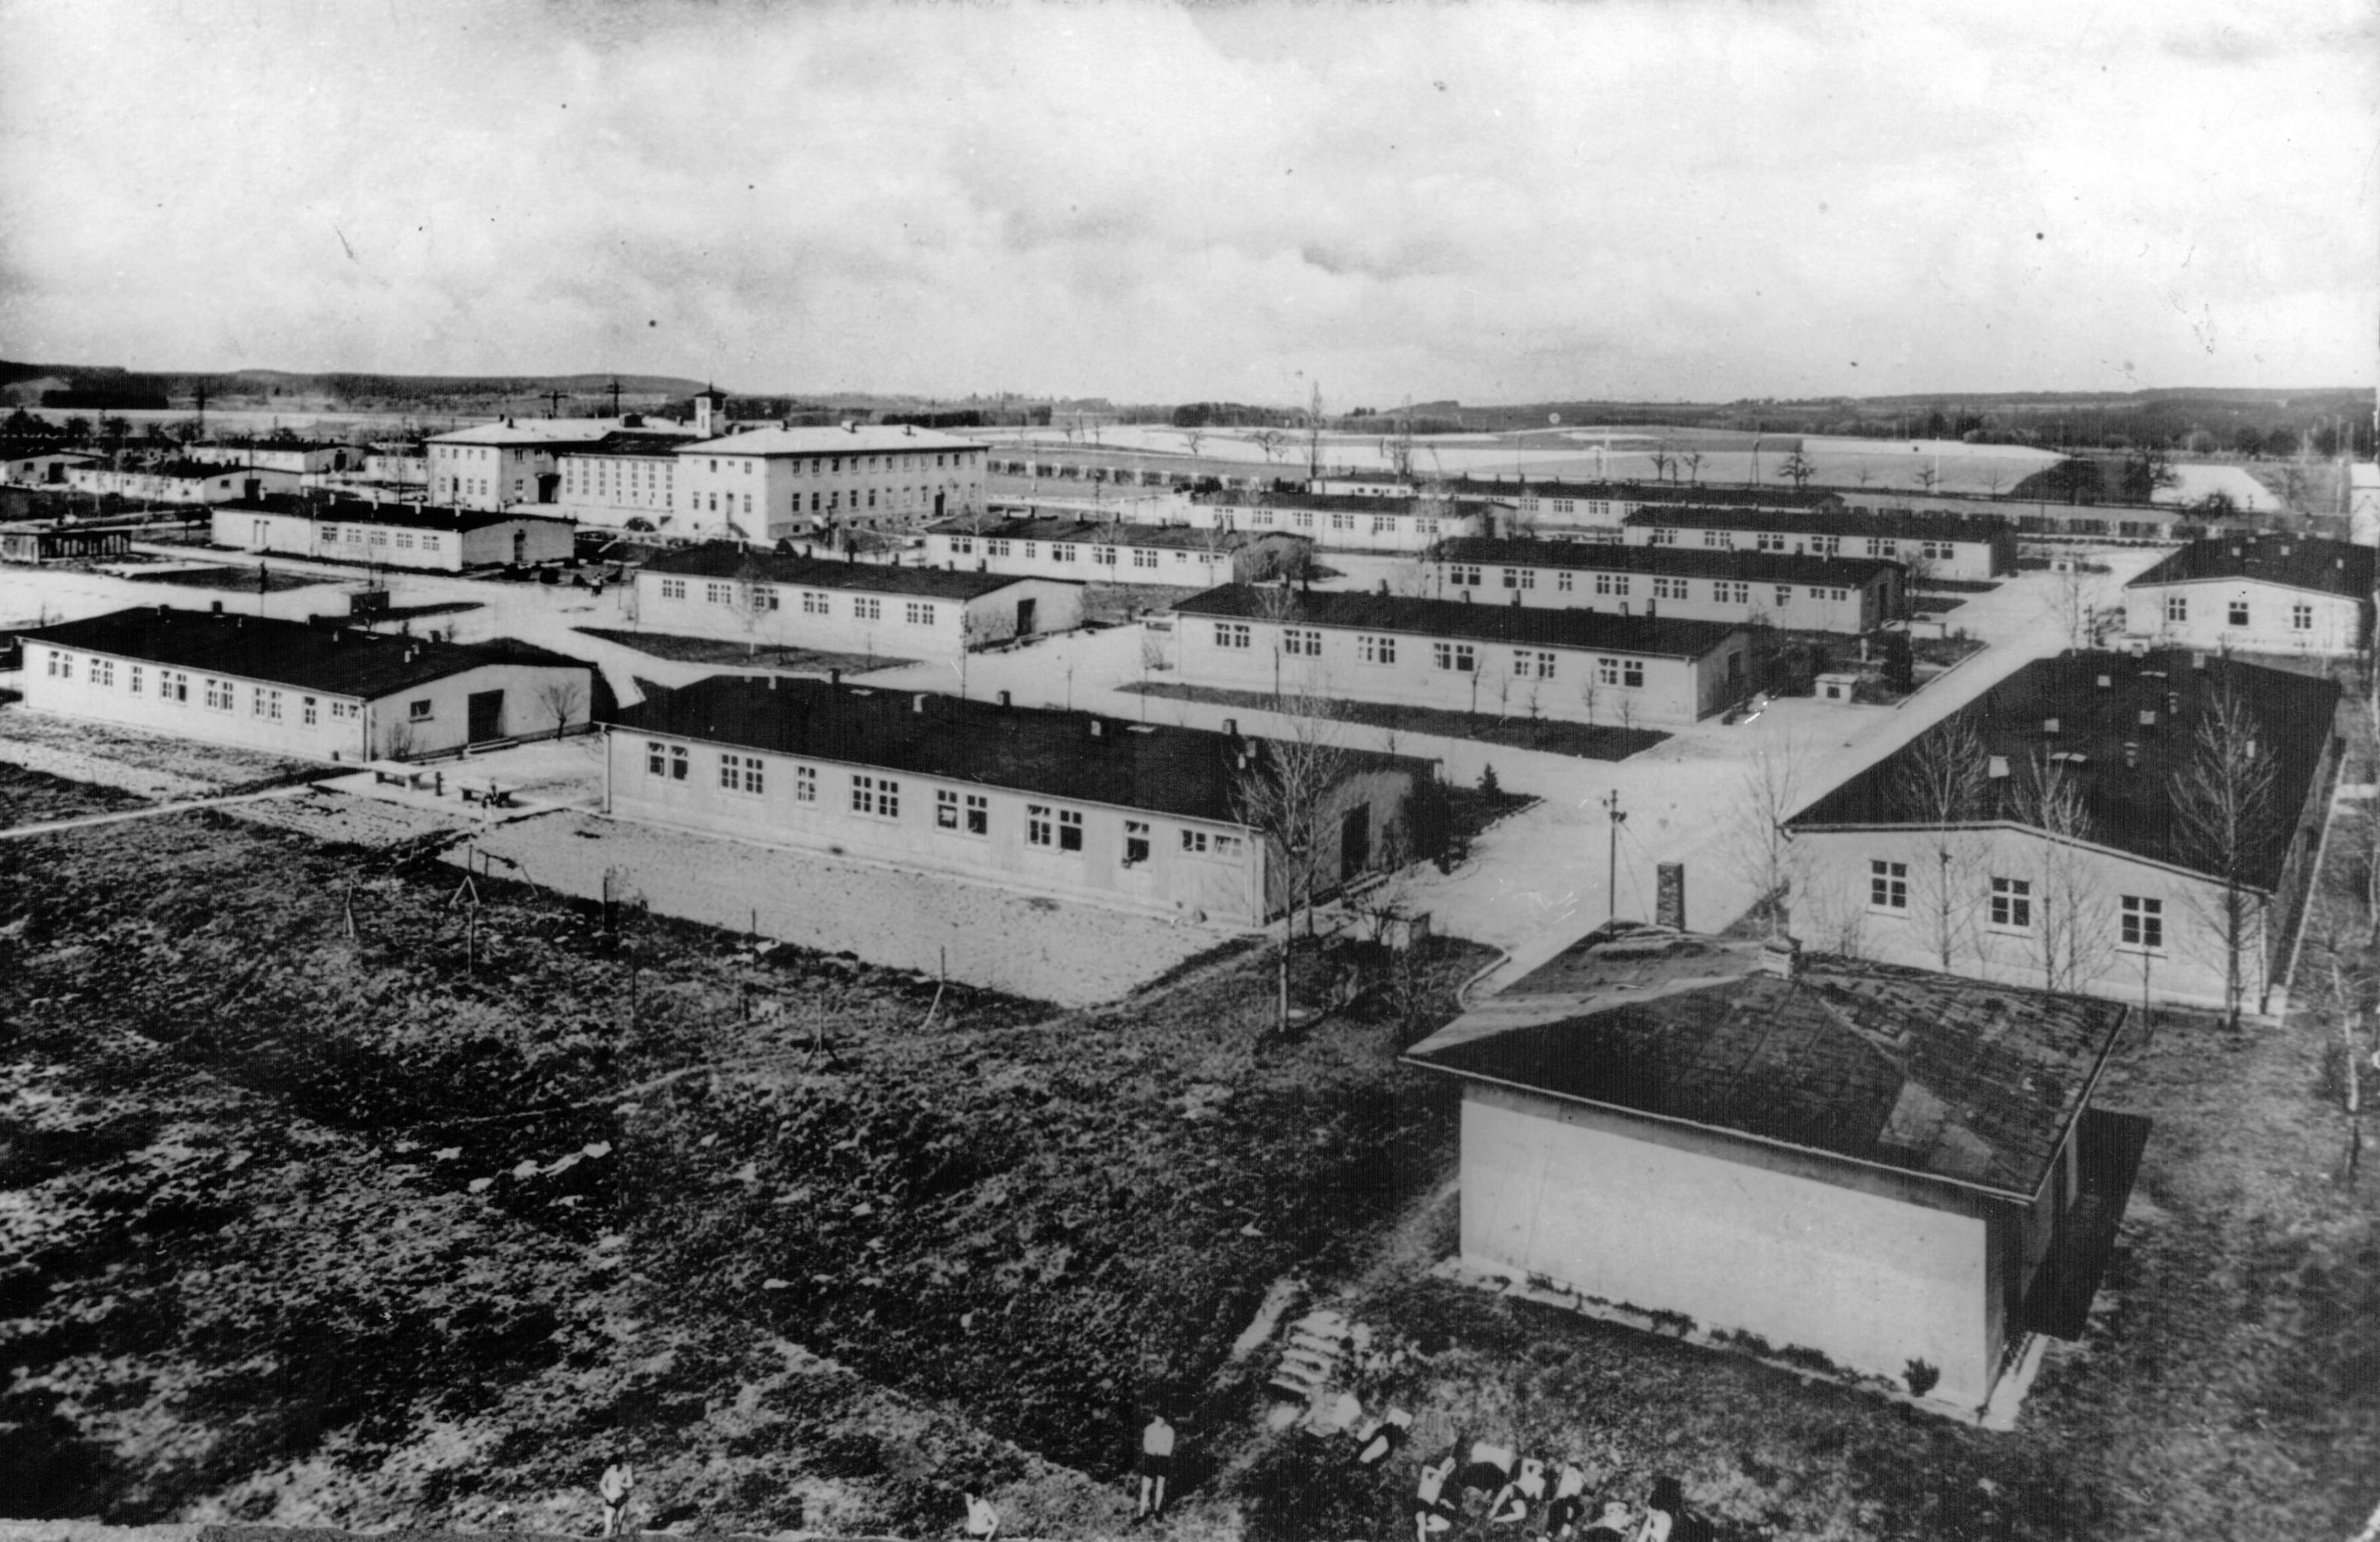 The Internment Camp at Biberach.